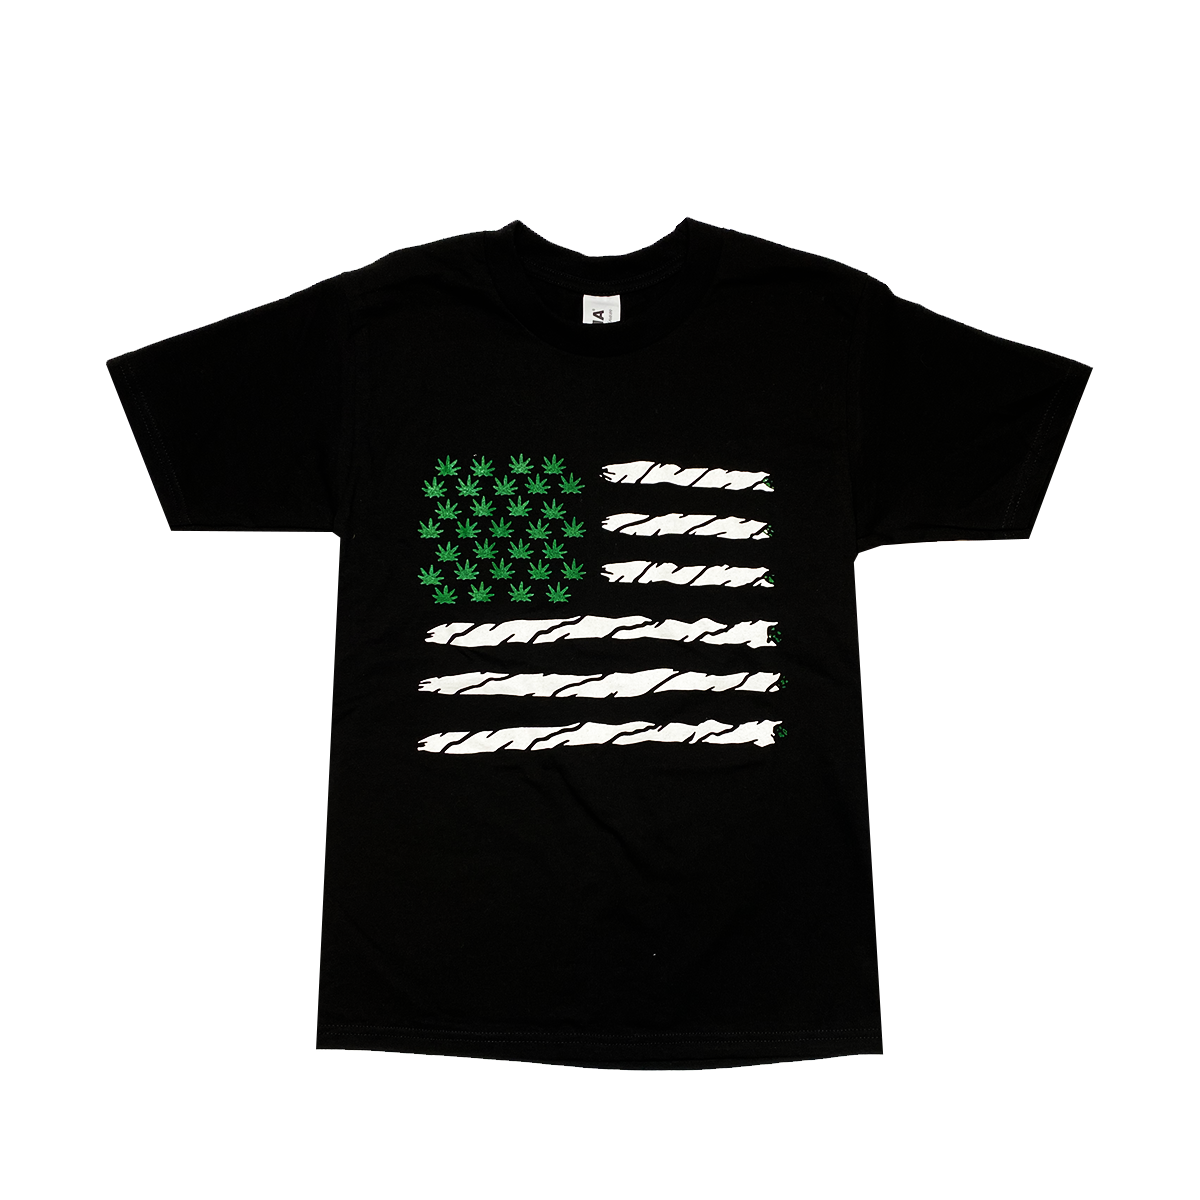 American Flag 100% Cotton T-Shirt, Pack of 5 Units, S, M, L, XL, XXL